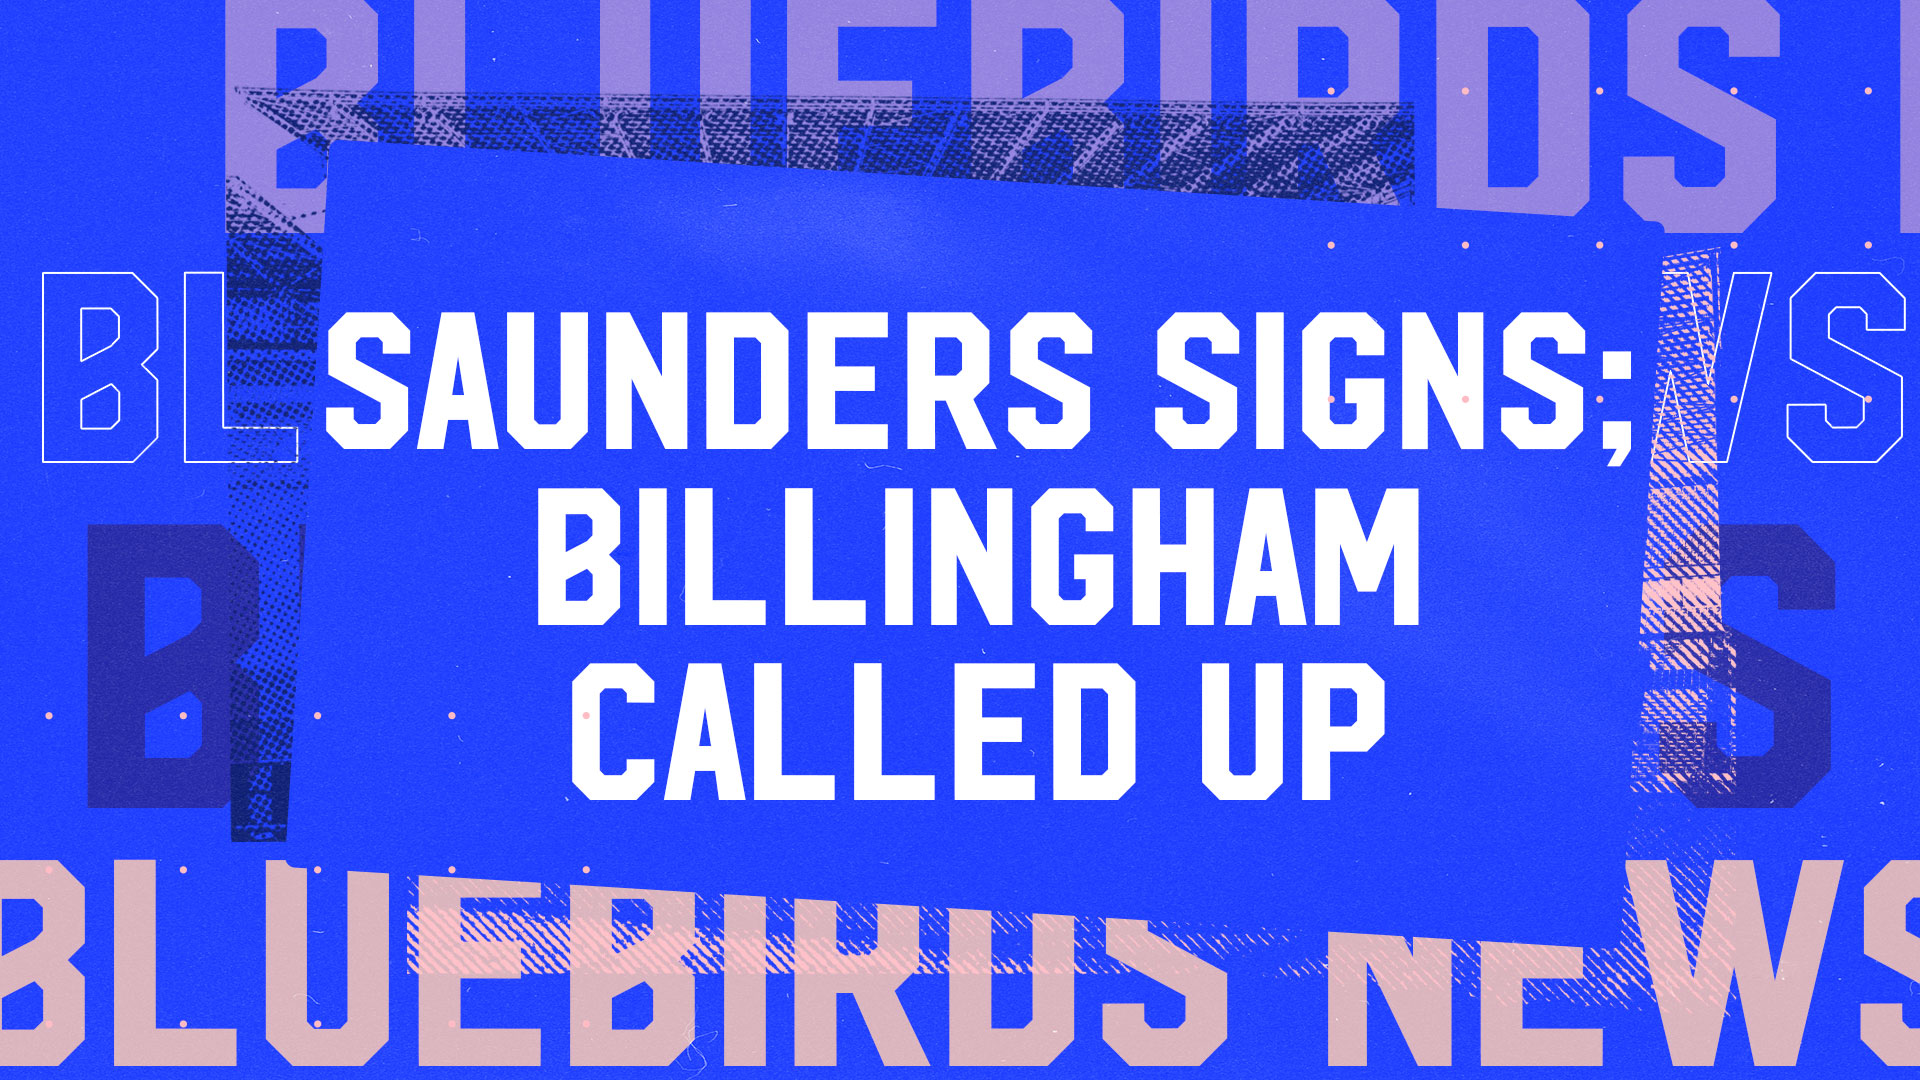 Saunders signs; Billingham called up...